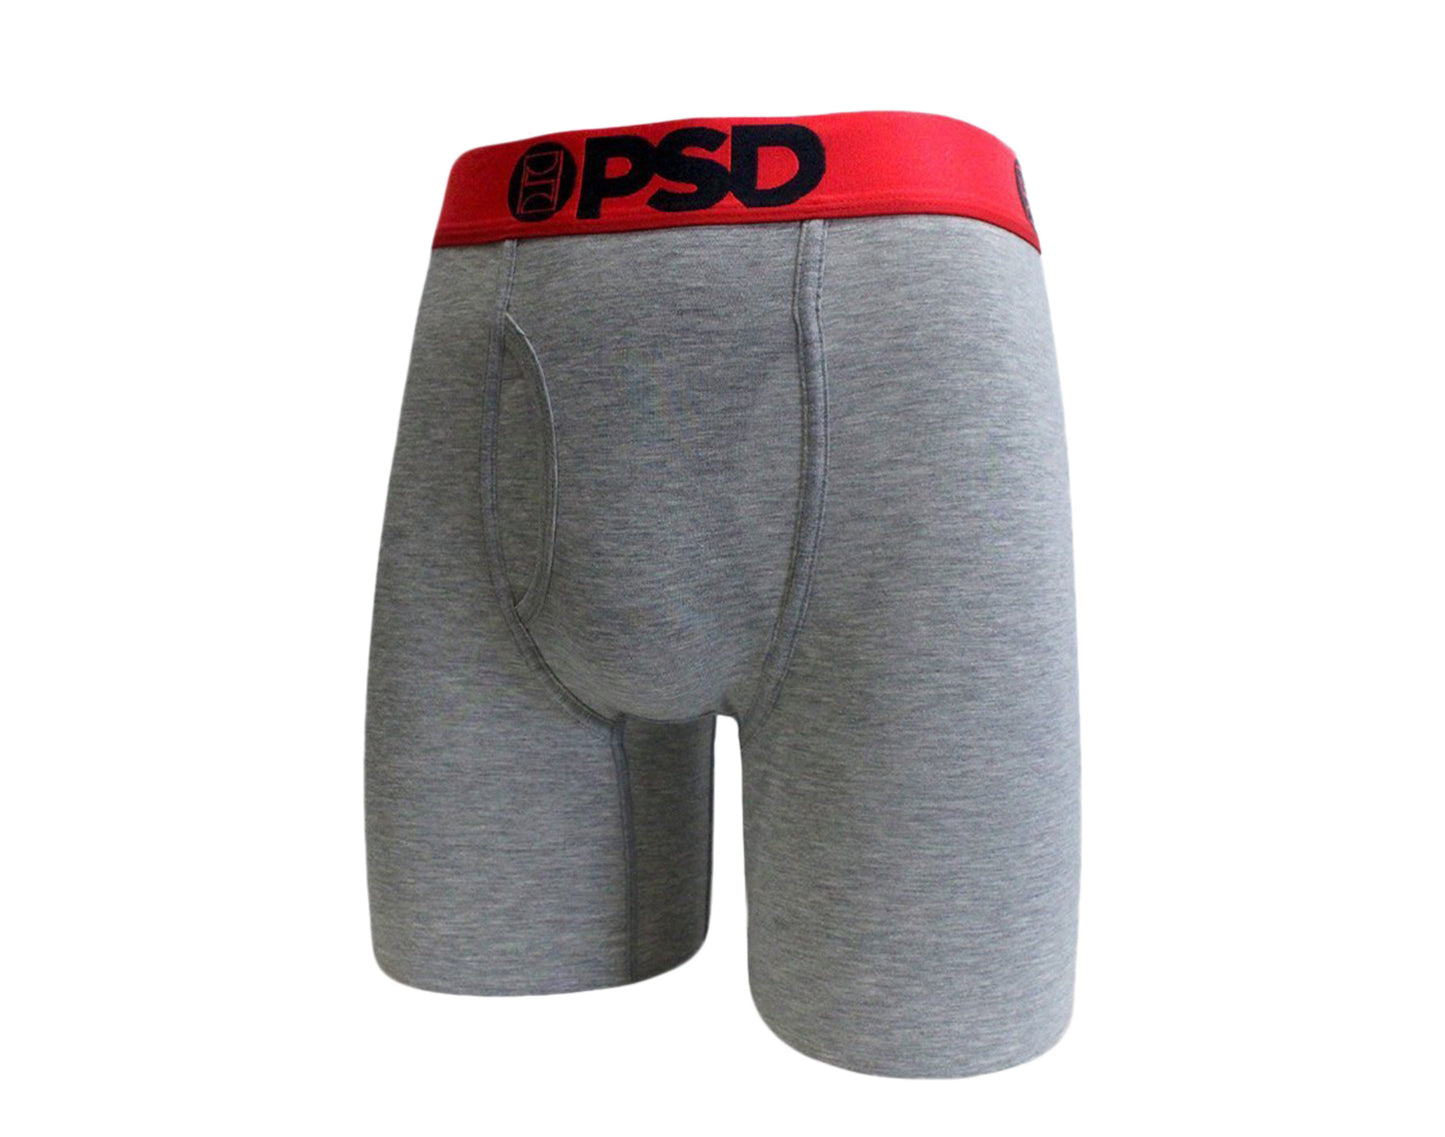 PSD Model - 3-Pack Boxer Briefs Men's Underwear